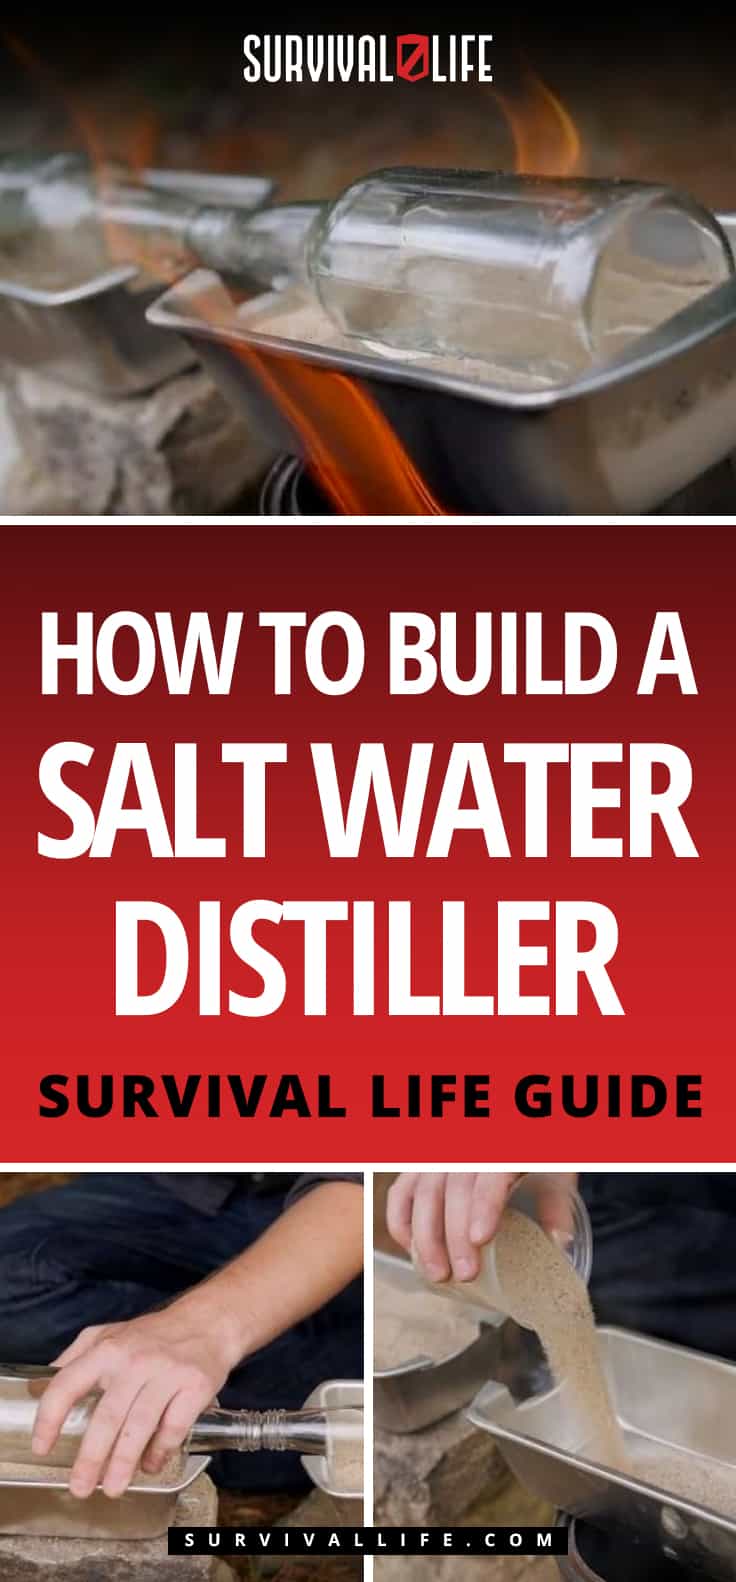 How To Build A Salt Water Distiller | Survival Life Guide | https://survivallife.com/build-salt-water